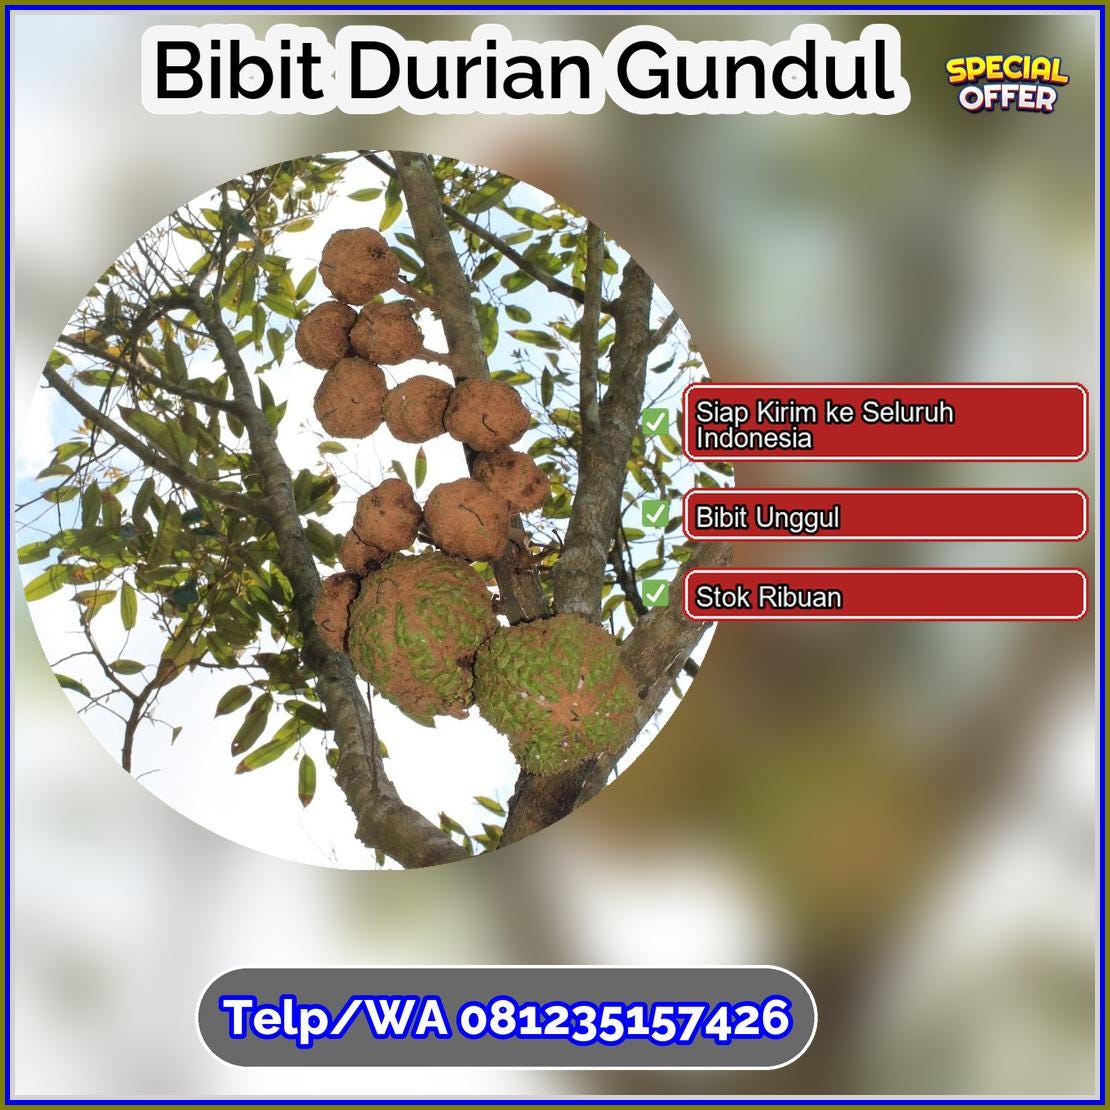 Harga Bibit Durian Gundul Kota Pekanbaru